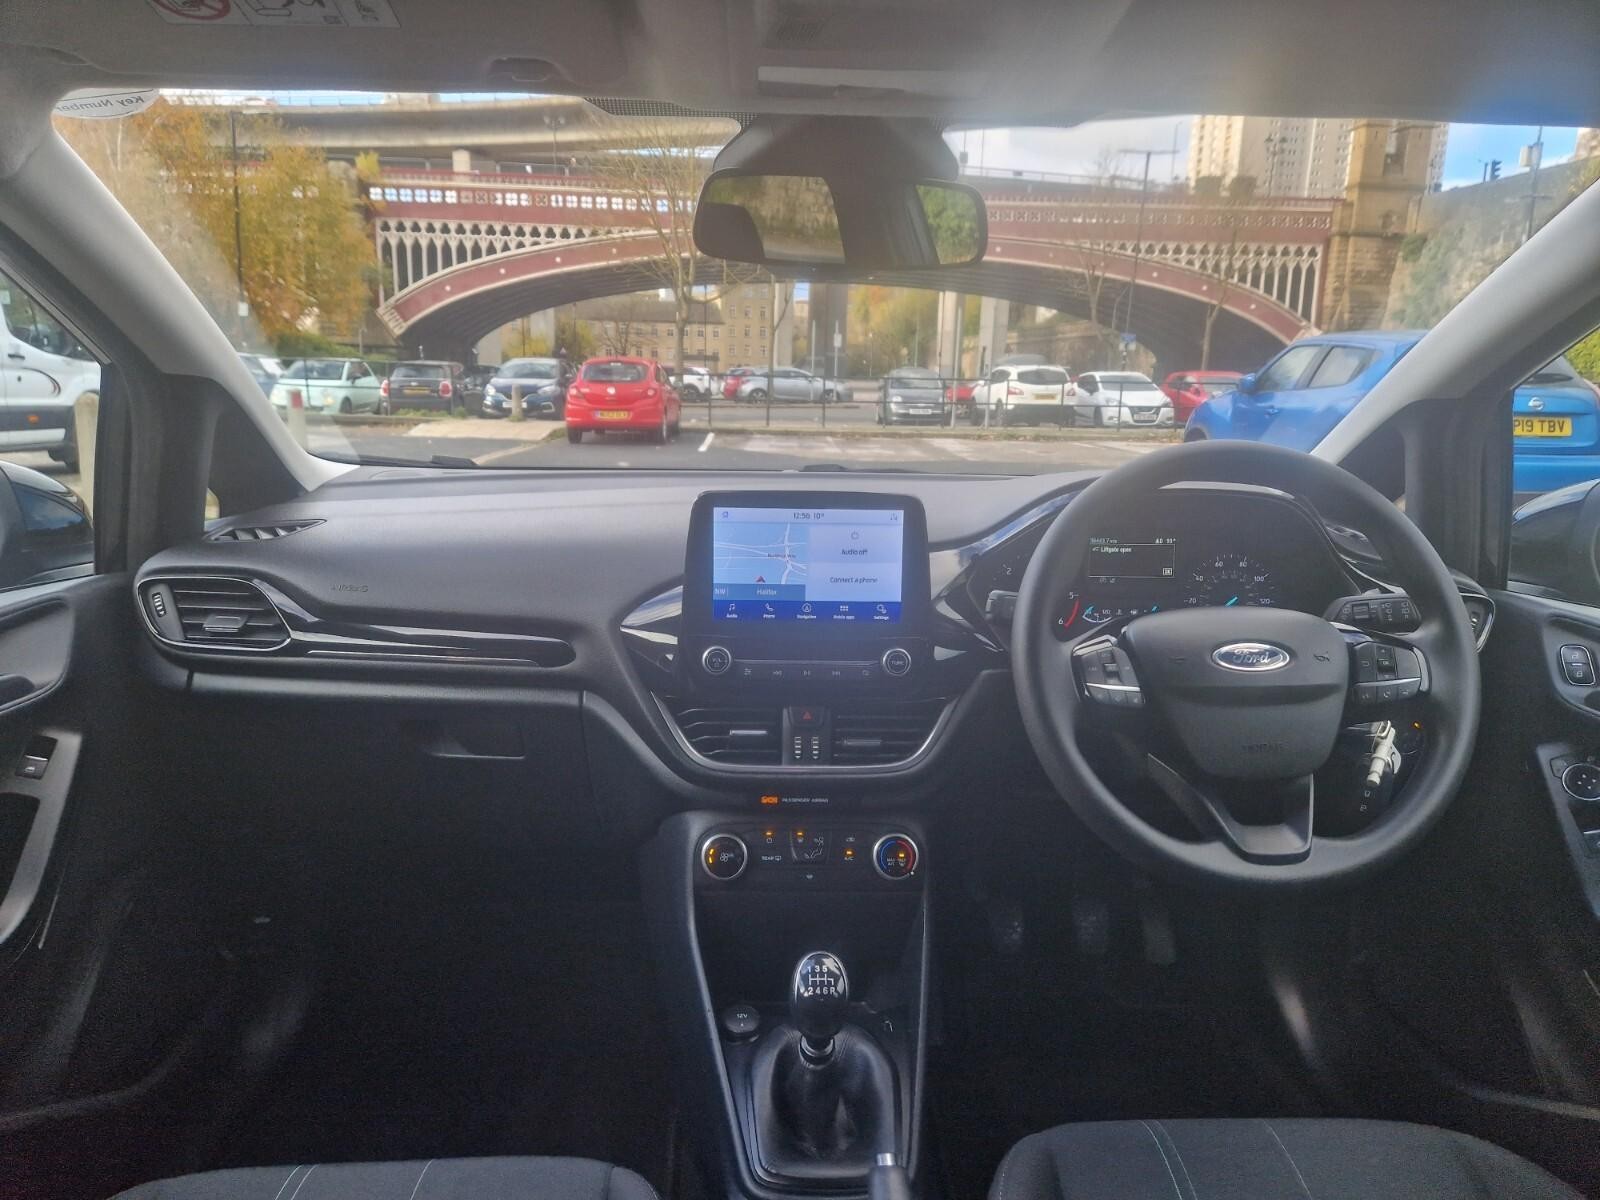 Ford Fiesta 1.5 TDCi Trend Navigation 5dr (AE70LGU) image 13